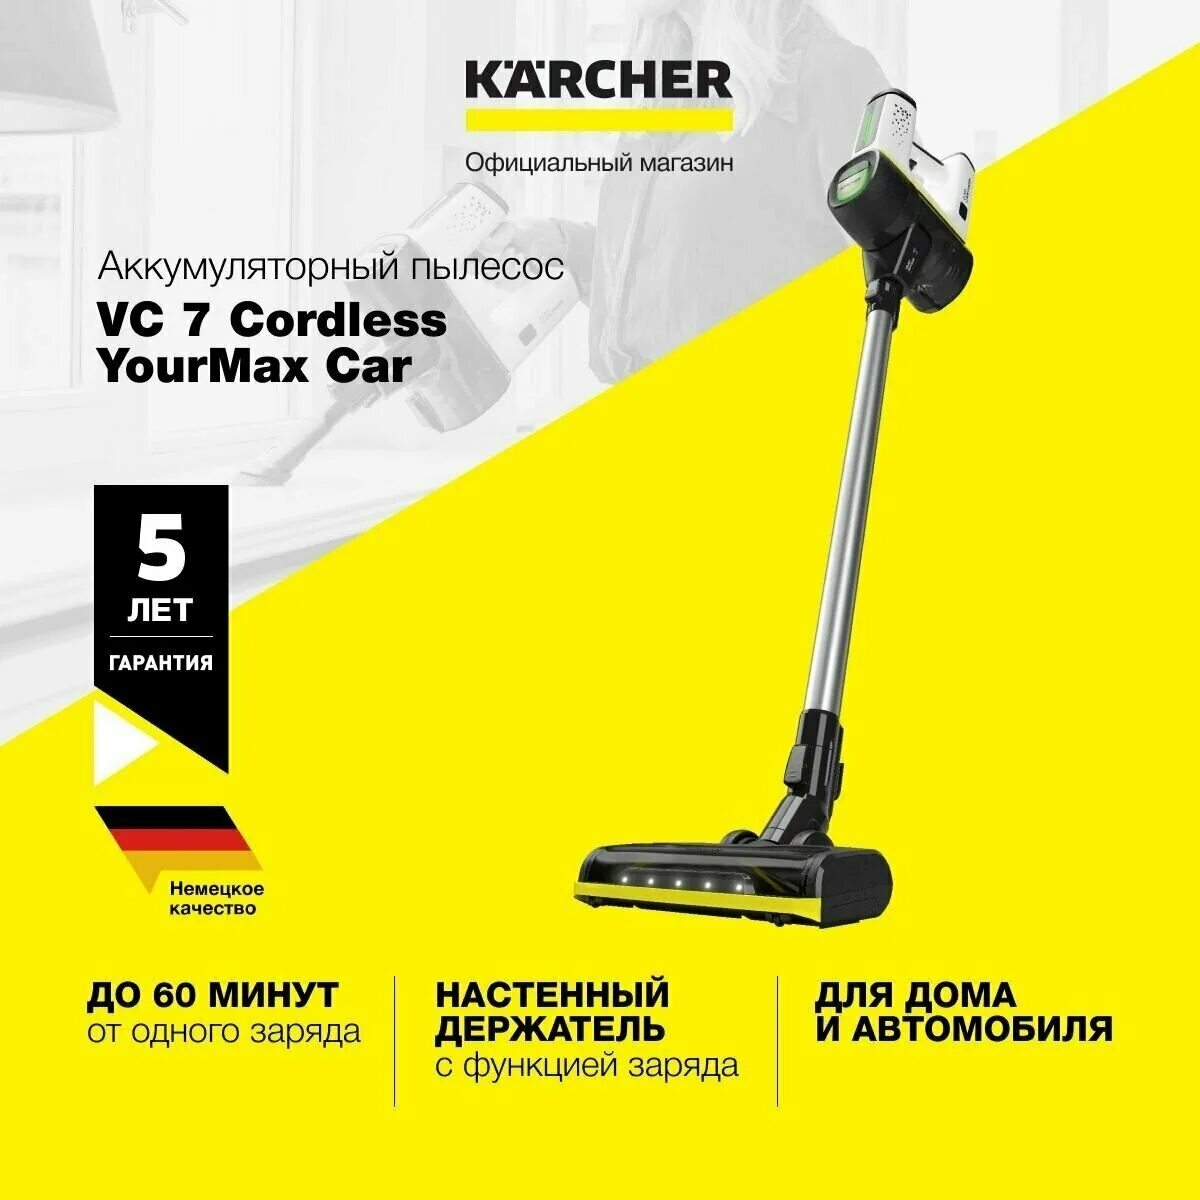 Karcher VC 7 Cordless yourmax. VC 6 Cordless Premium ourfamily. Пылесос Karcher VC 4 Cordless myhome. Аккумуляторный пылесос Kärcher VC 7 Cordless yourmax. Вертикальный пылесос vc 4 cordless myhome